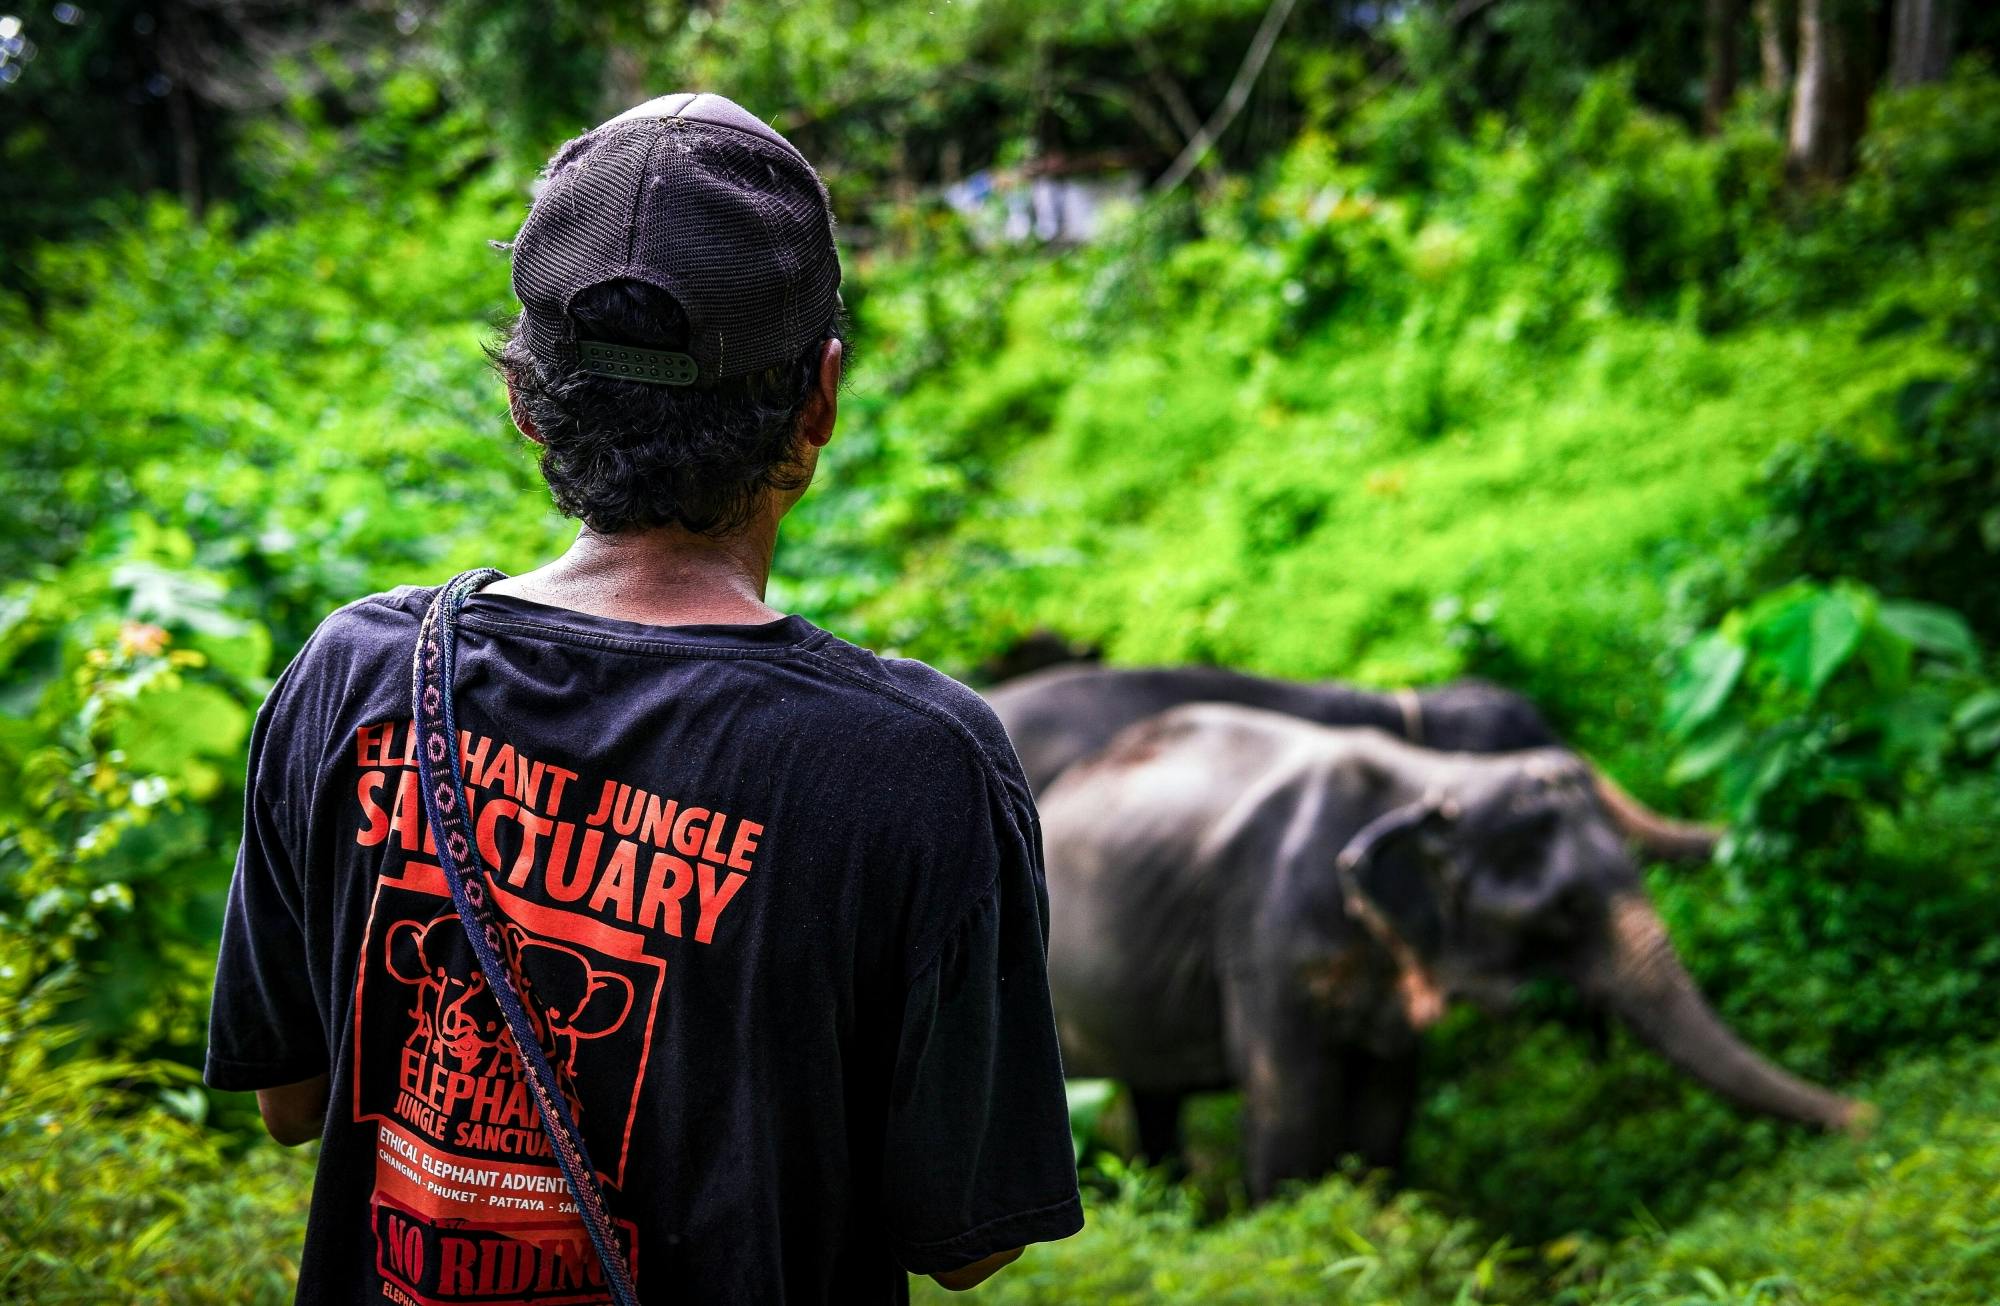 Full-Day Elephant Jungle Sanctuary Walking Tour From Phuket